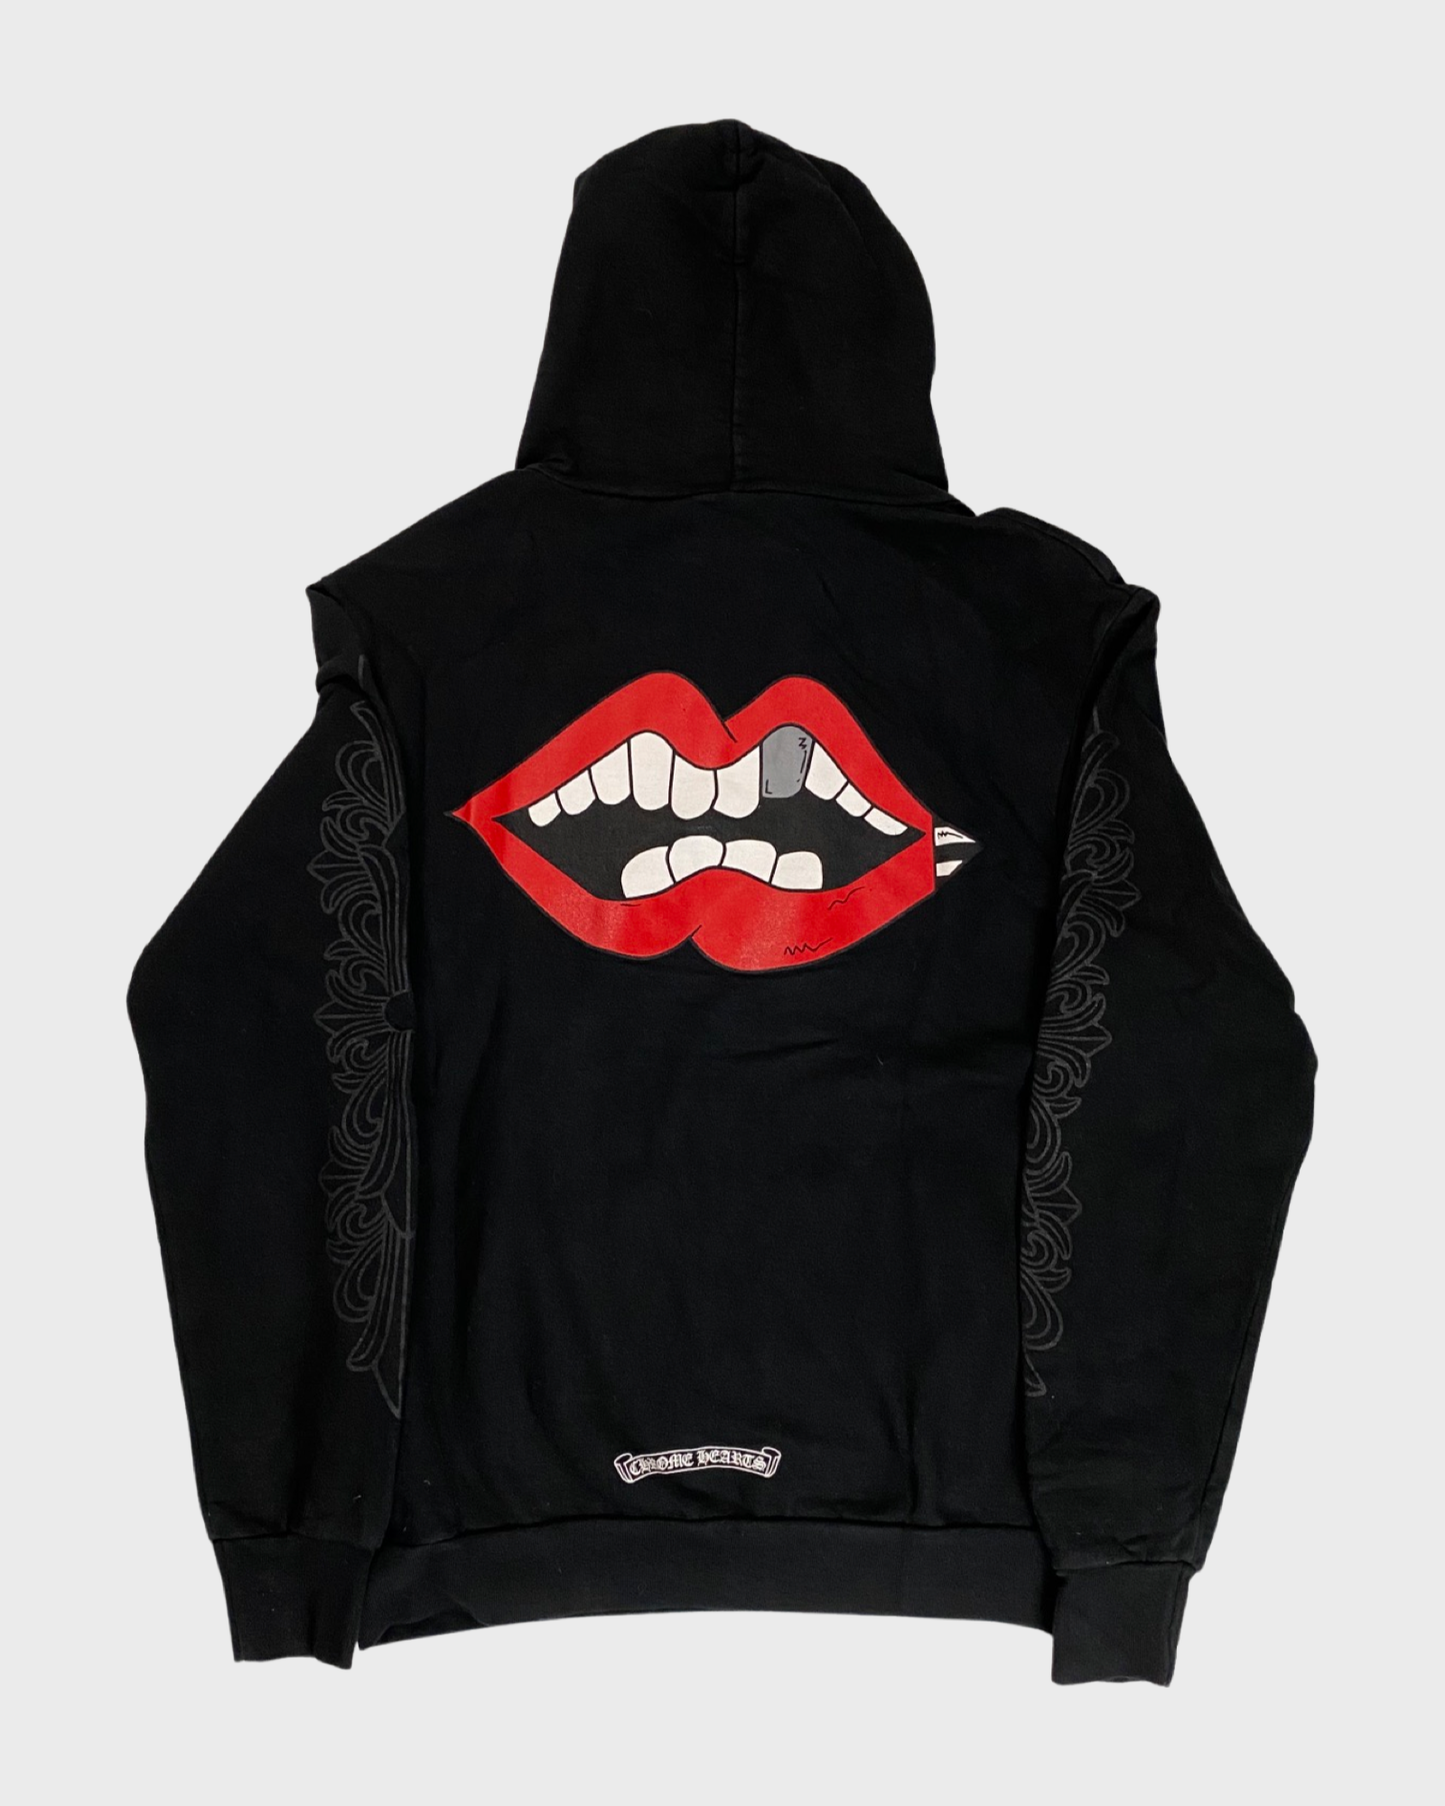 Chrome Hearts x Mattyboy floral chomper hoodie in black SZ:S|M